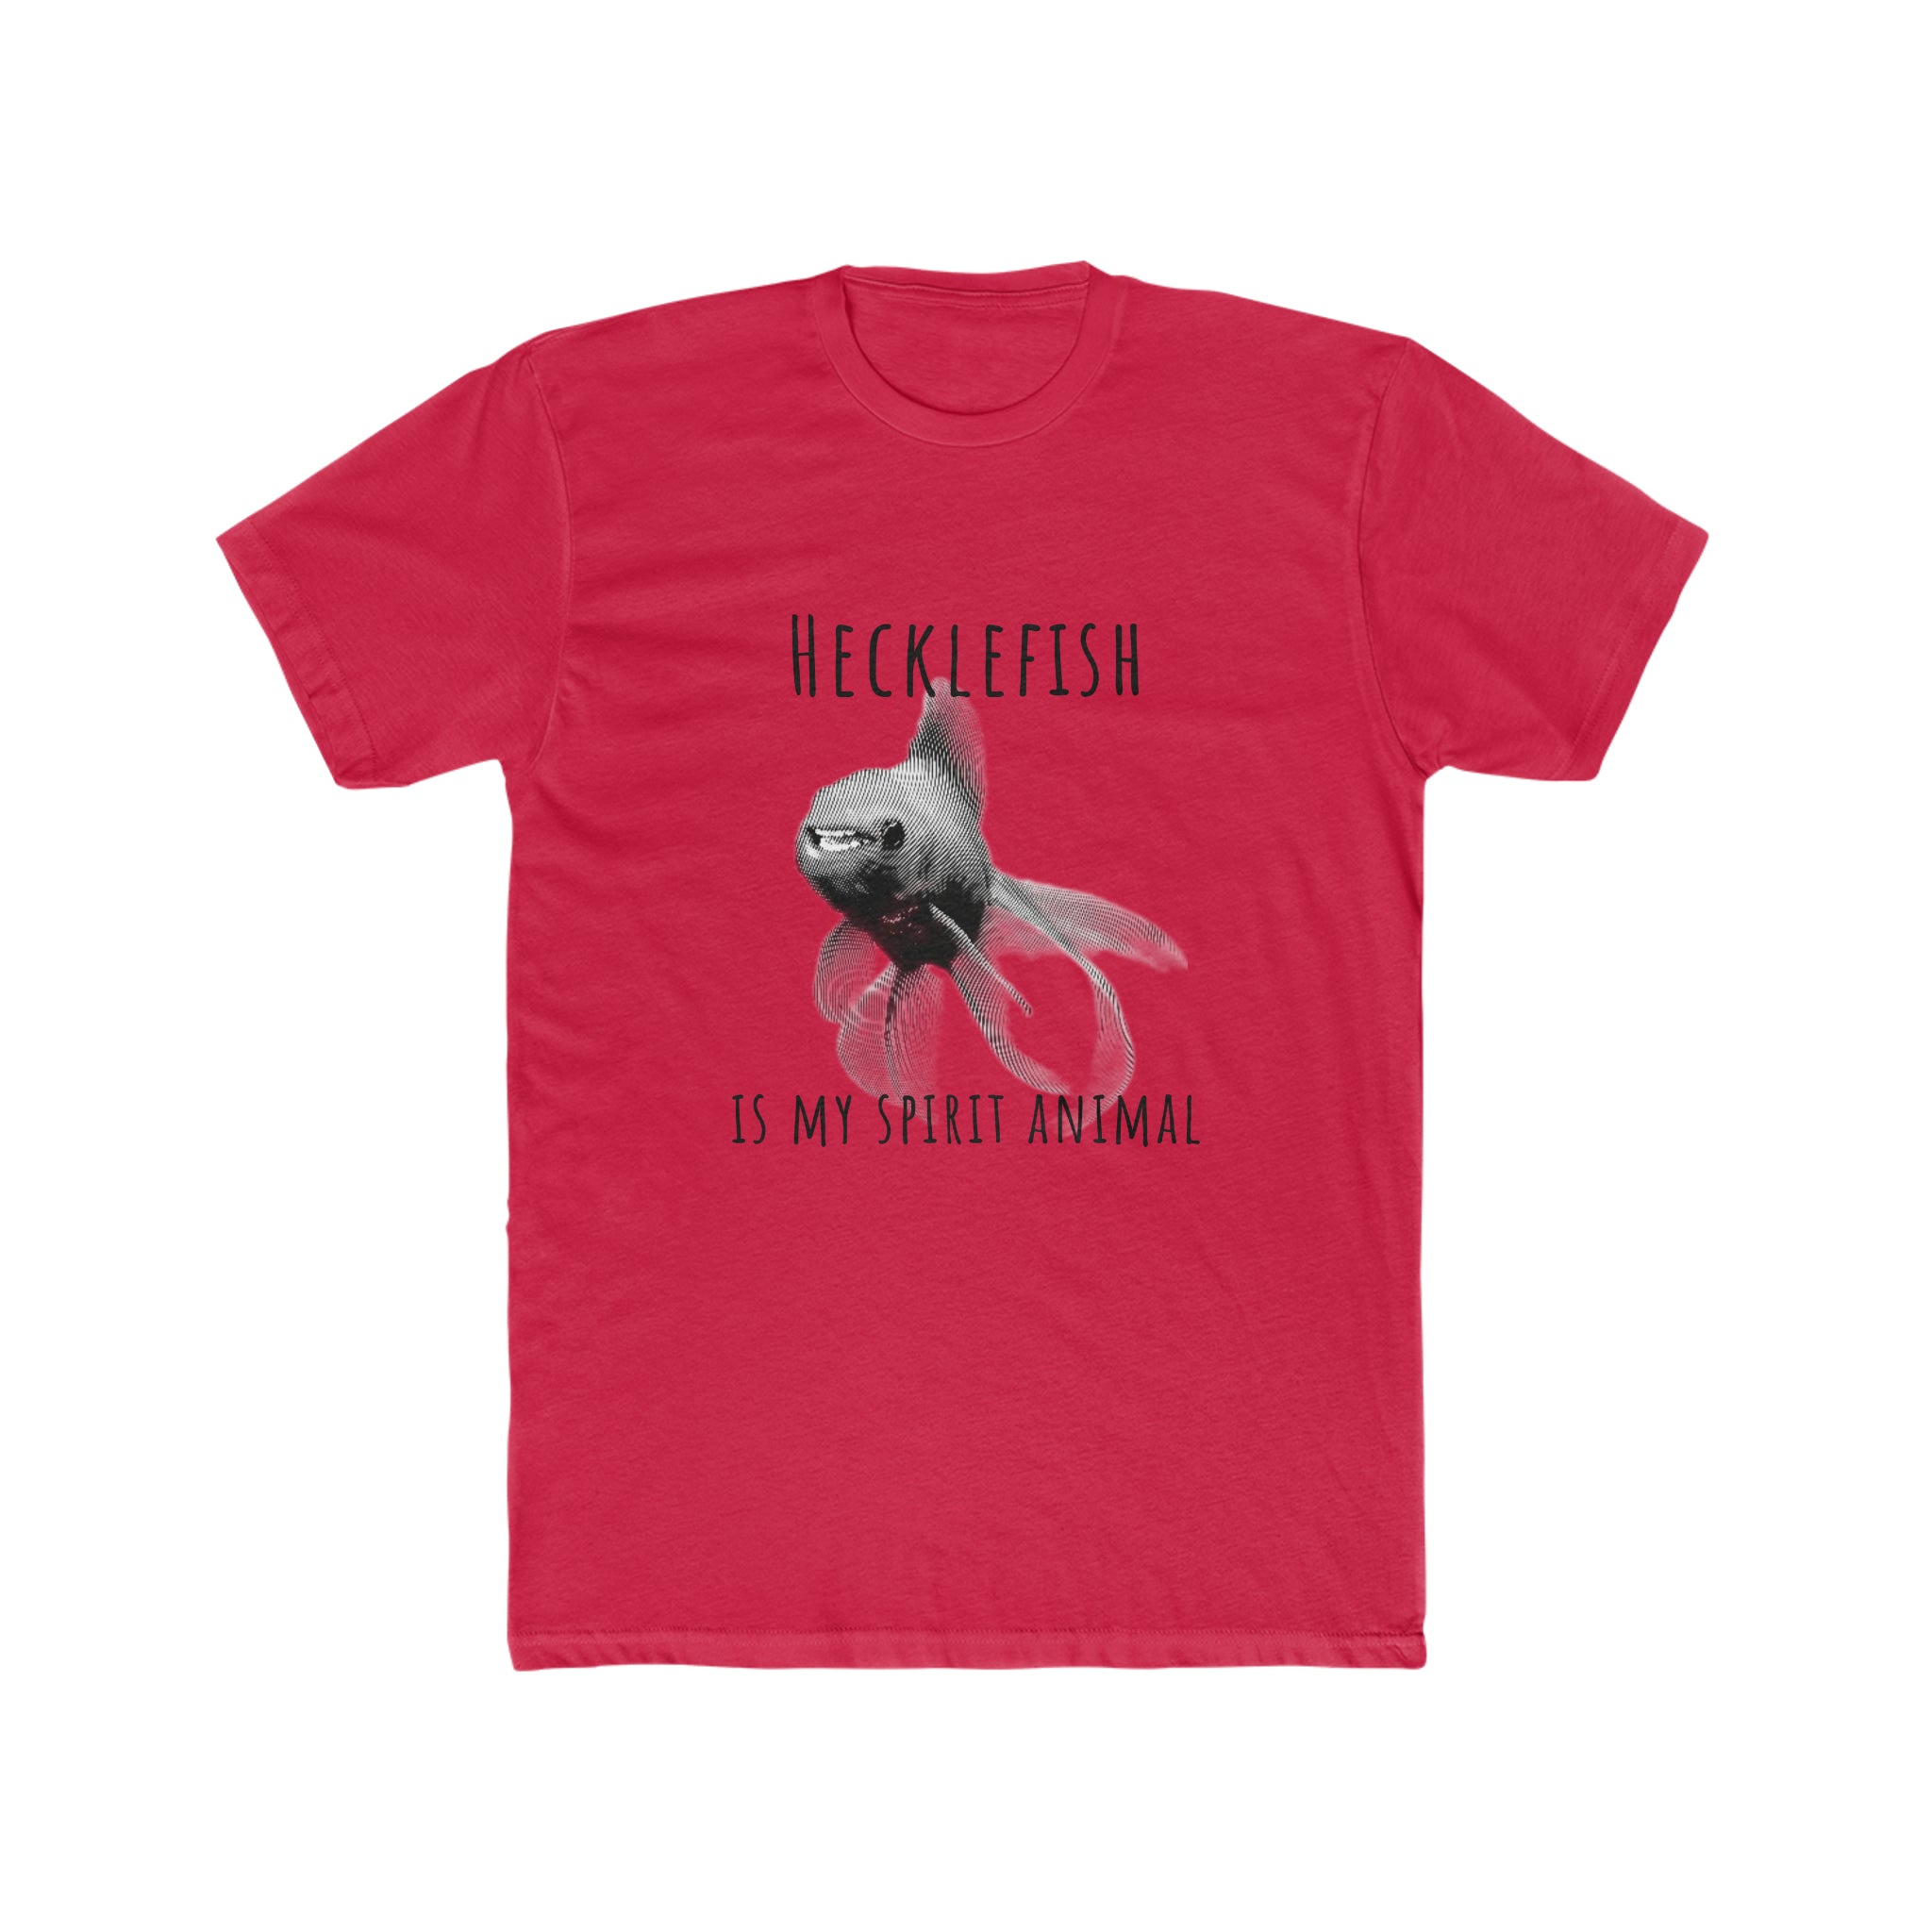 Hecklefish Spirit Animal Unisex T-Shirt